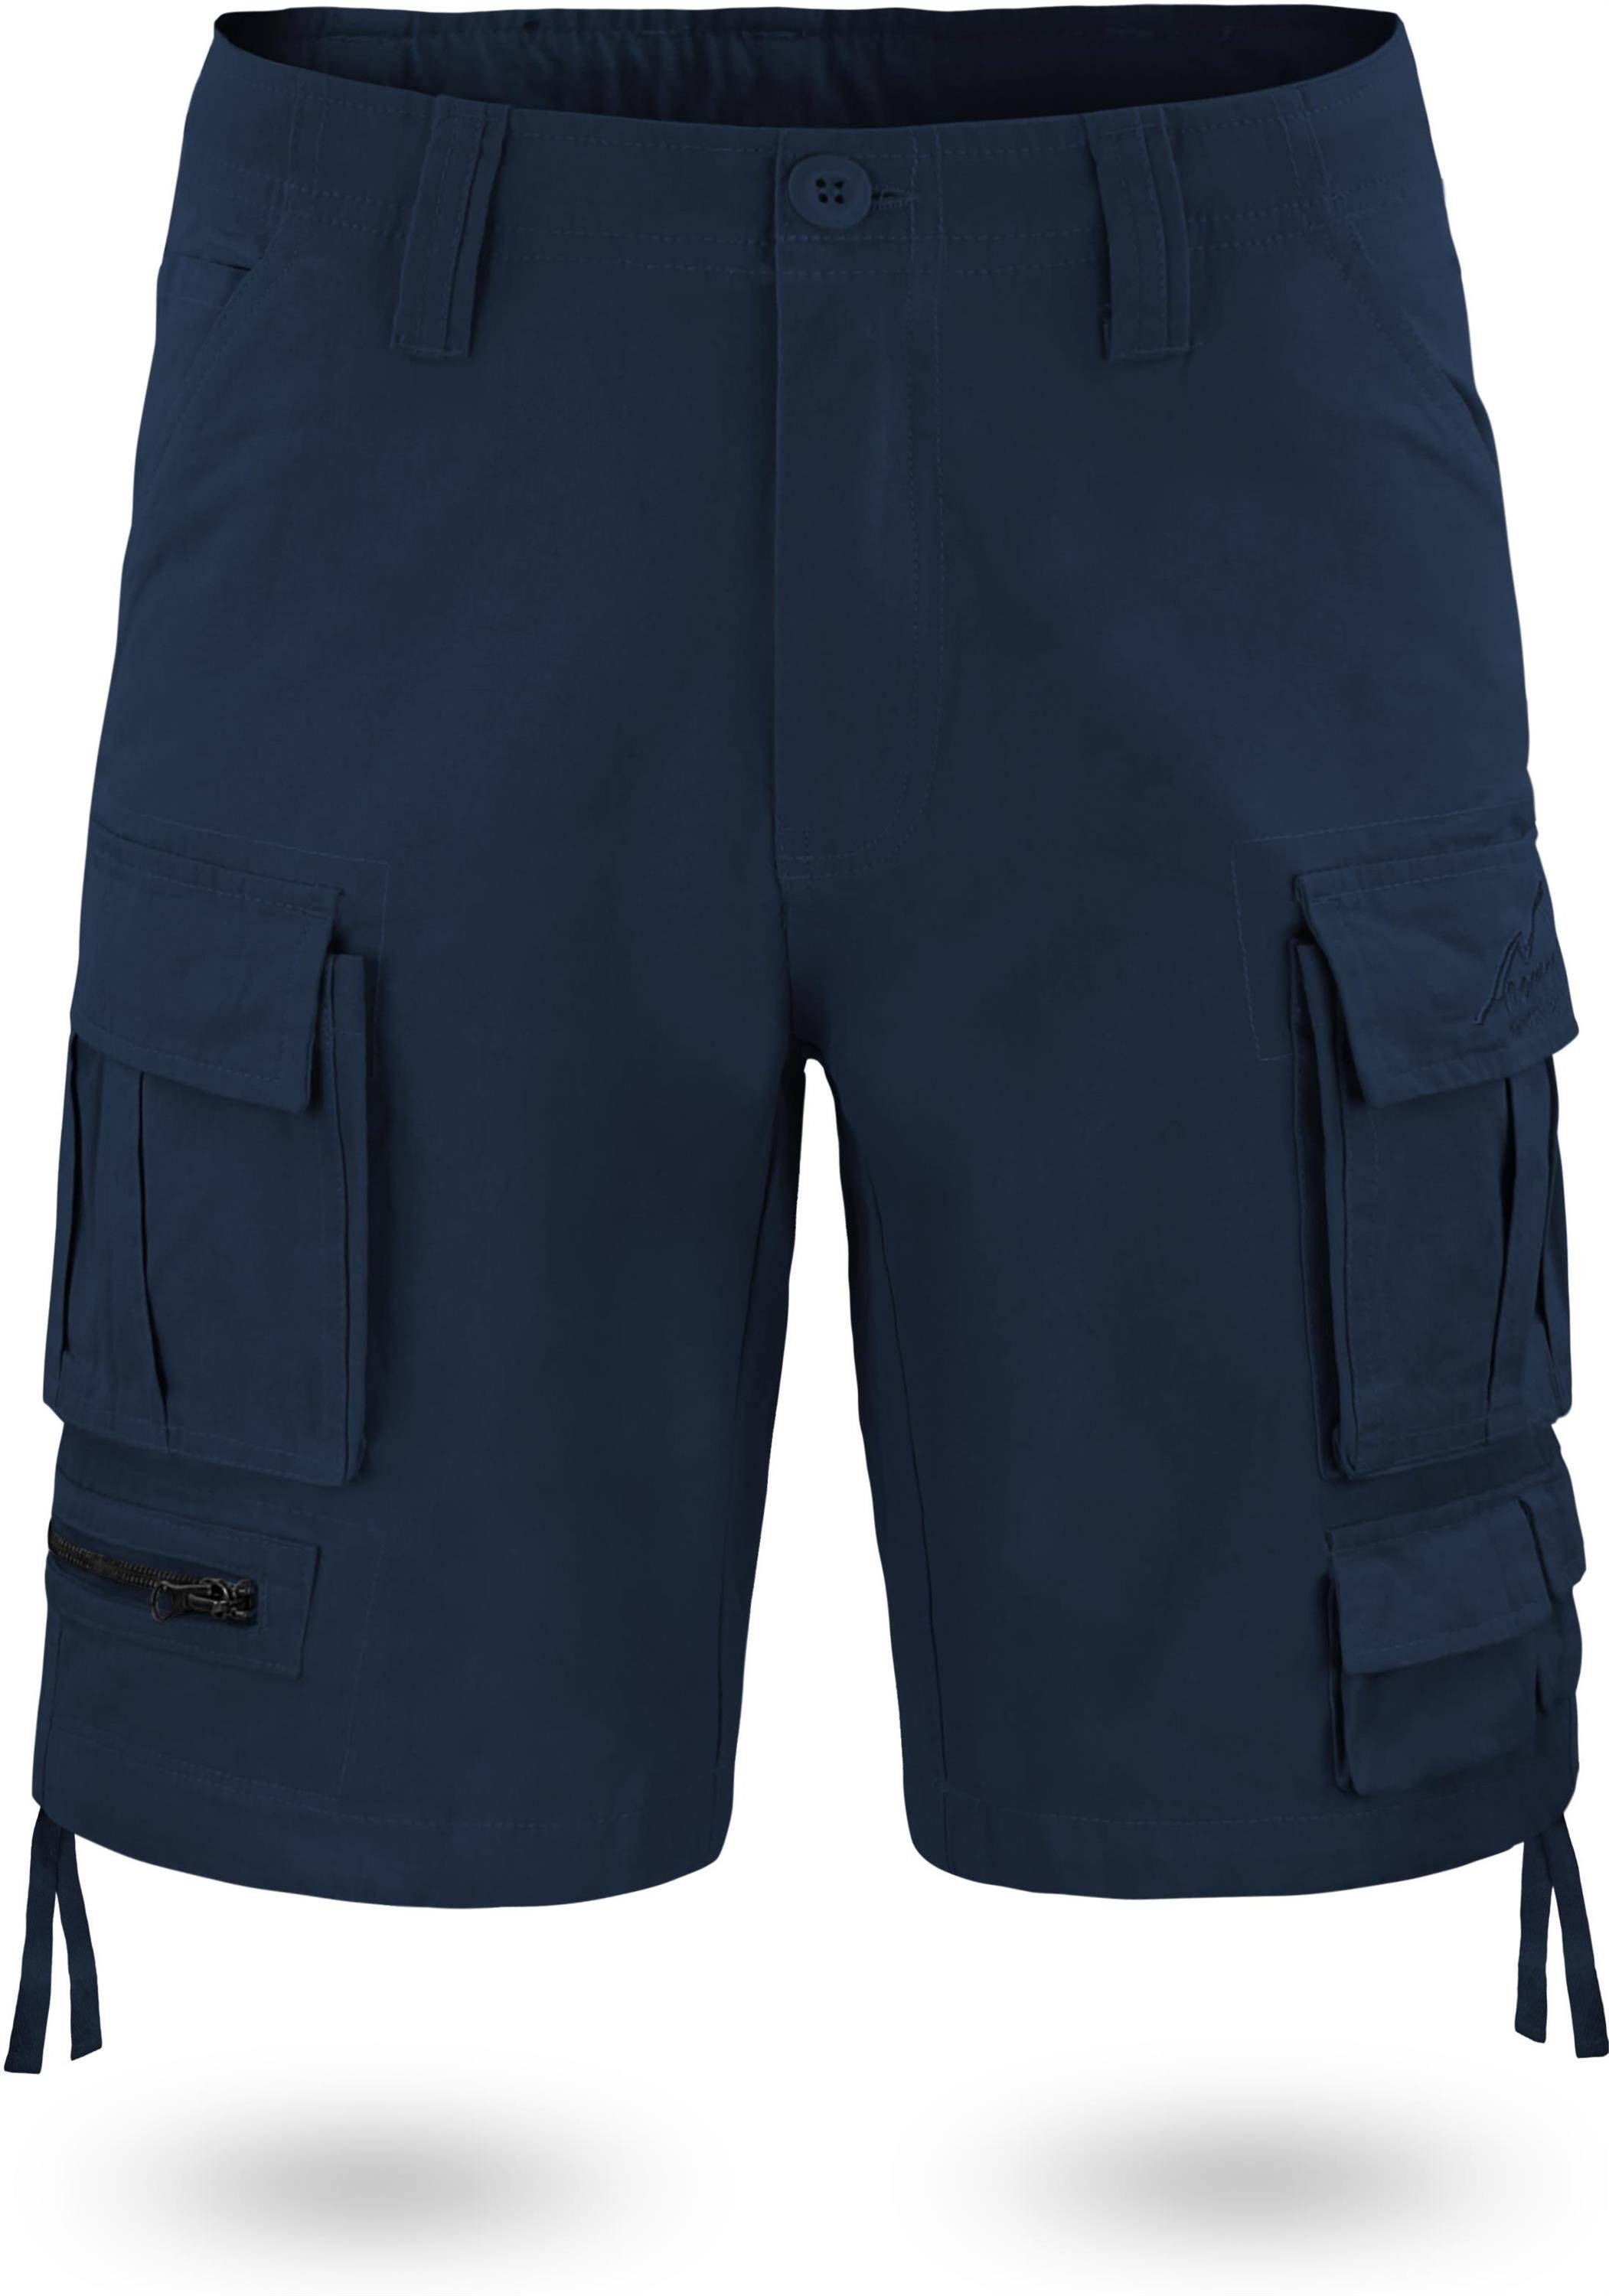 normani Bermudas aus Atacama Navy Vintage Sommershorts Shorts Bio-Baumwolle kurze Cargoshorts 100% Herren Shorts